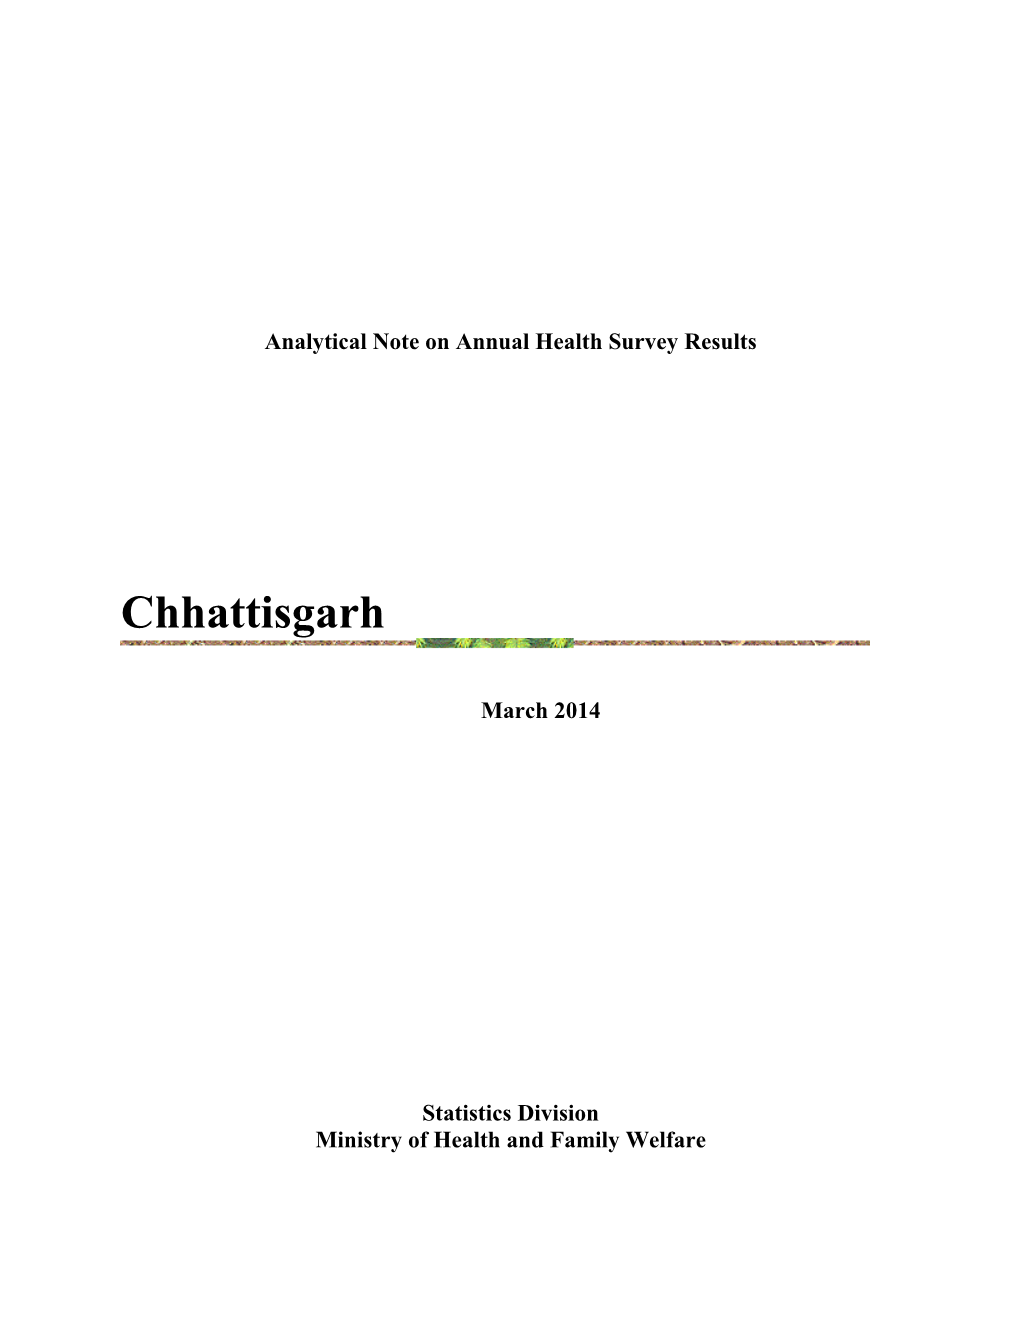 Detailed Note on AHS 2011-12 Chhattisgarh